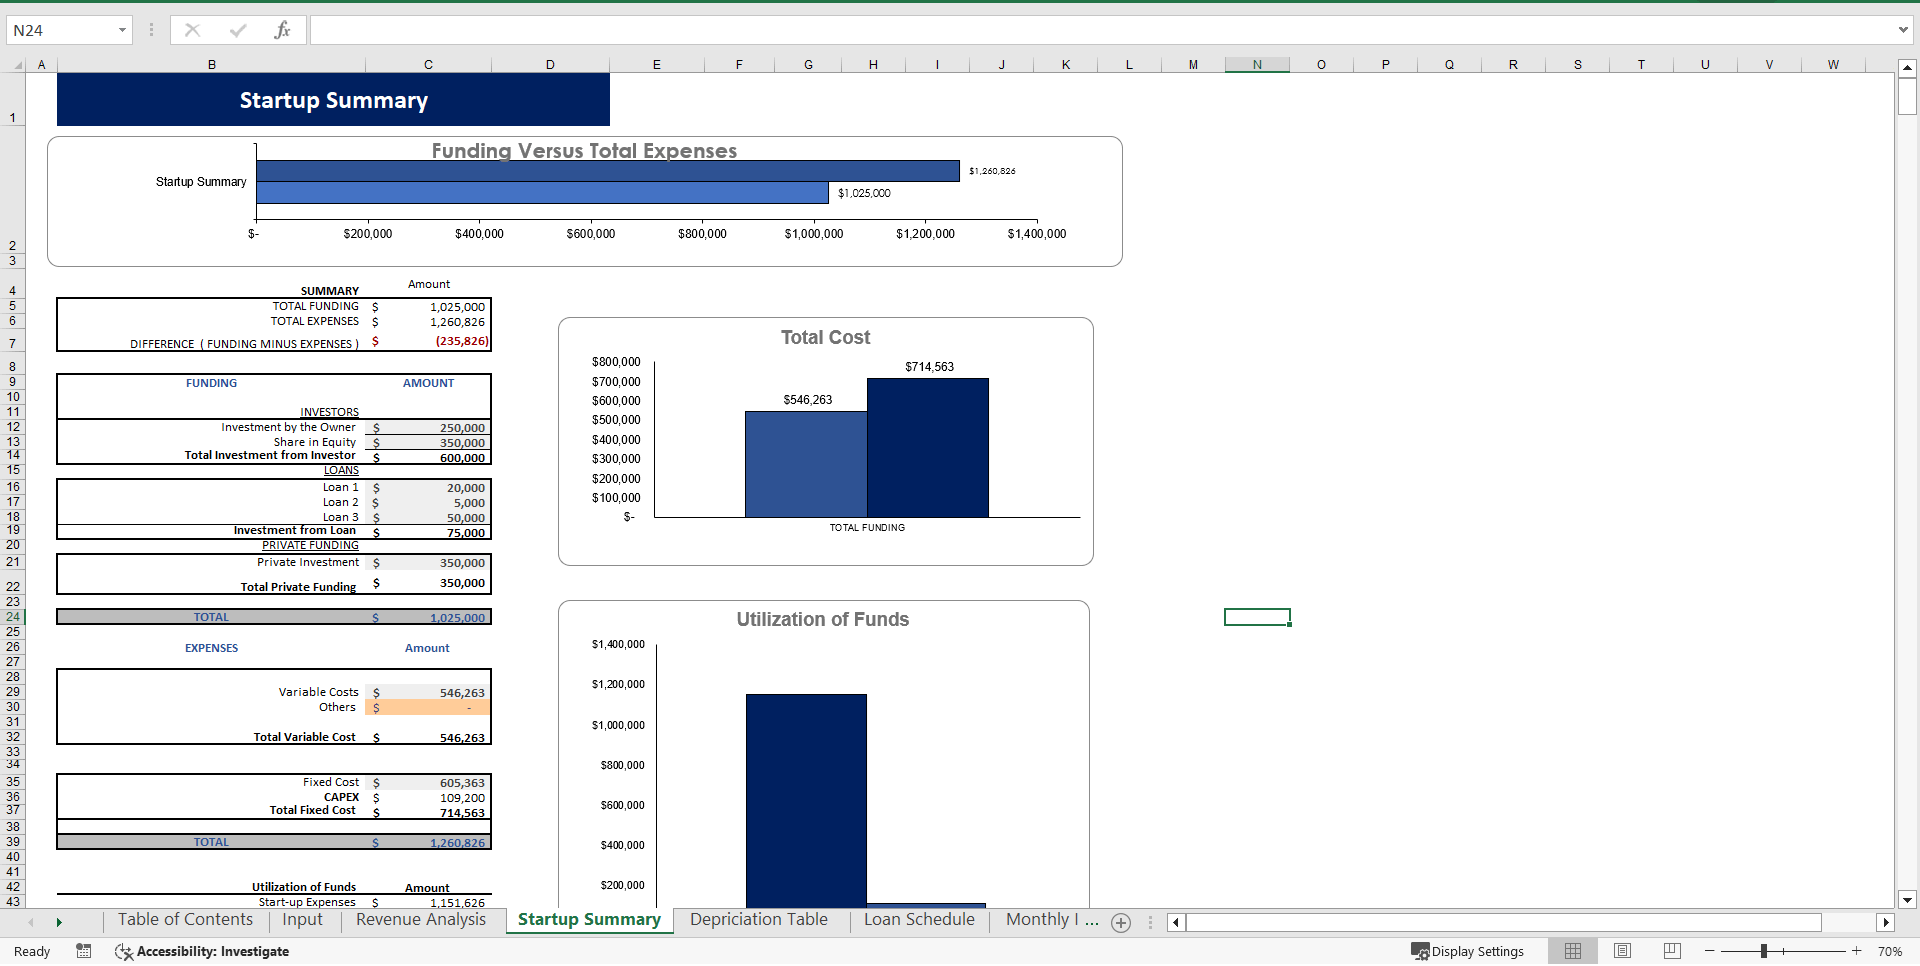 Online Perfume Shop Excel Financial Model (Excel template (XLSX)) Preview Image